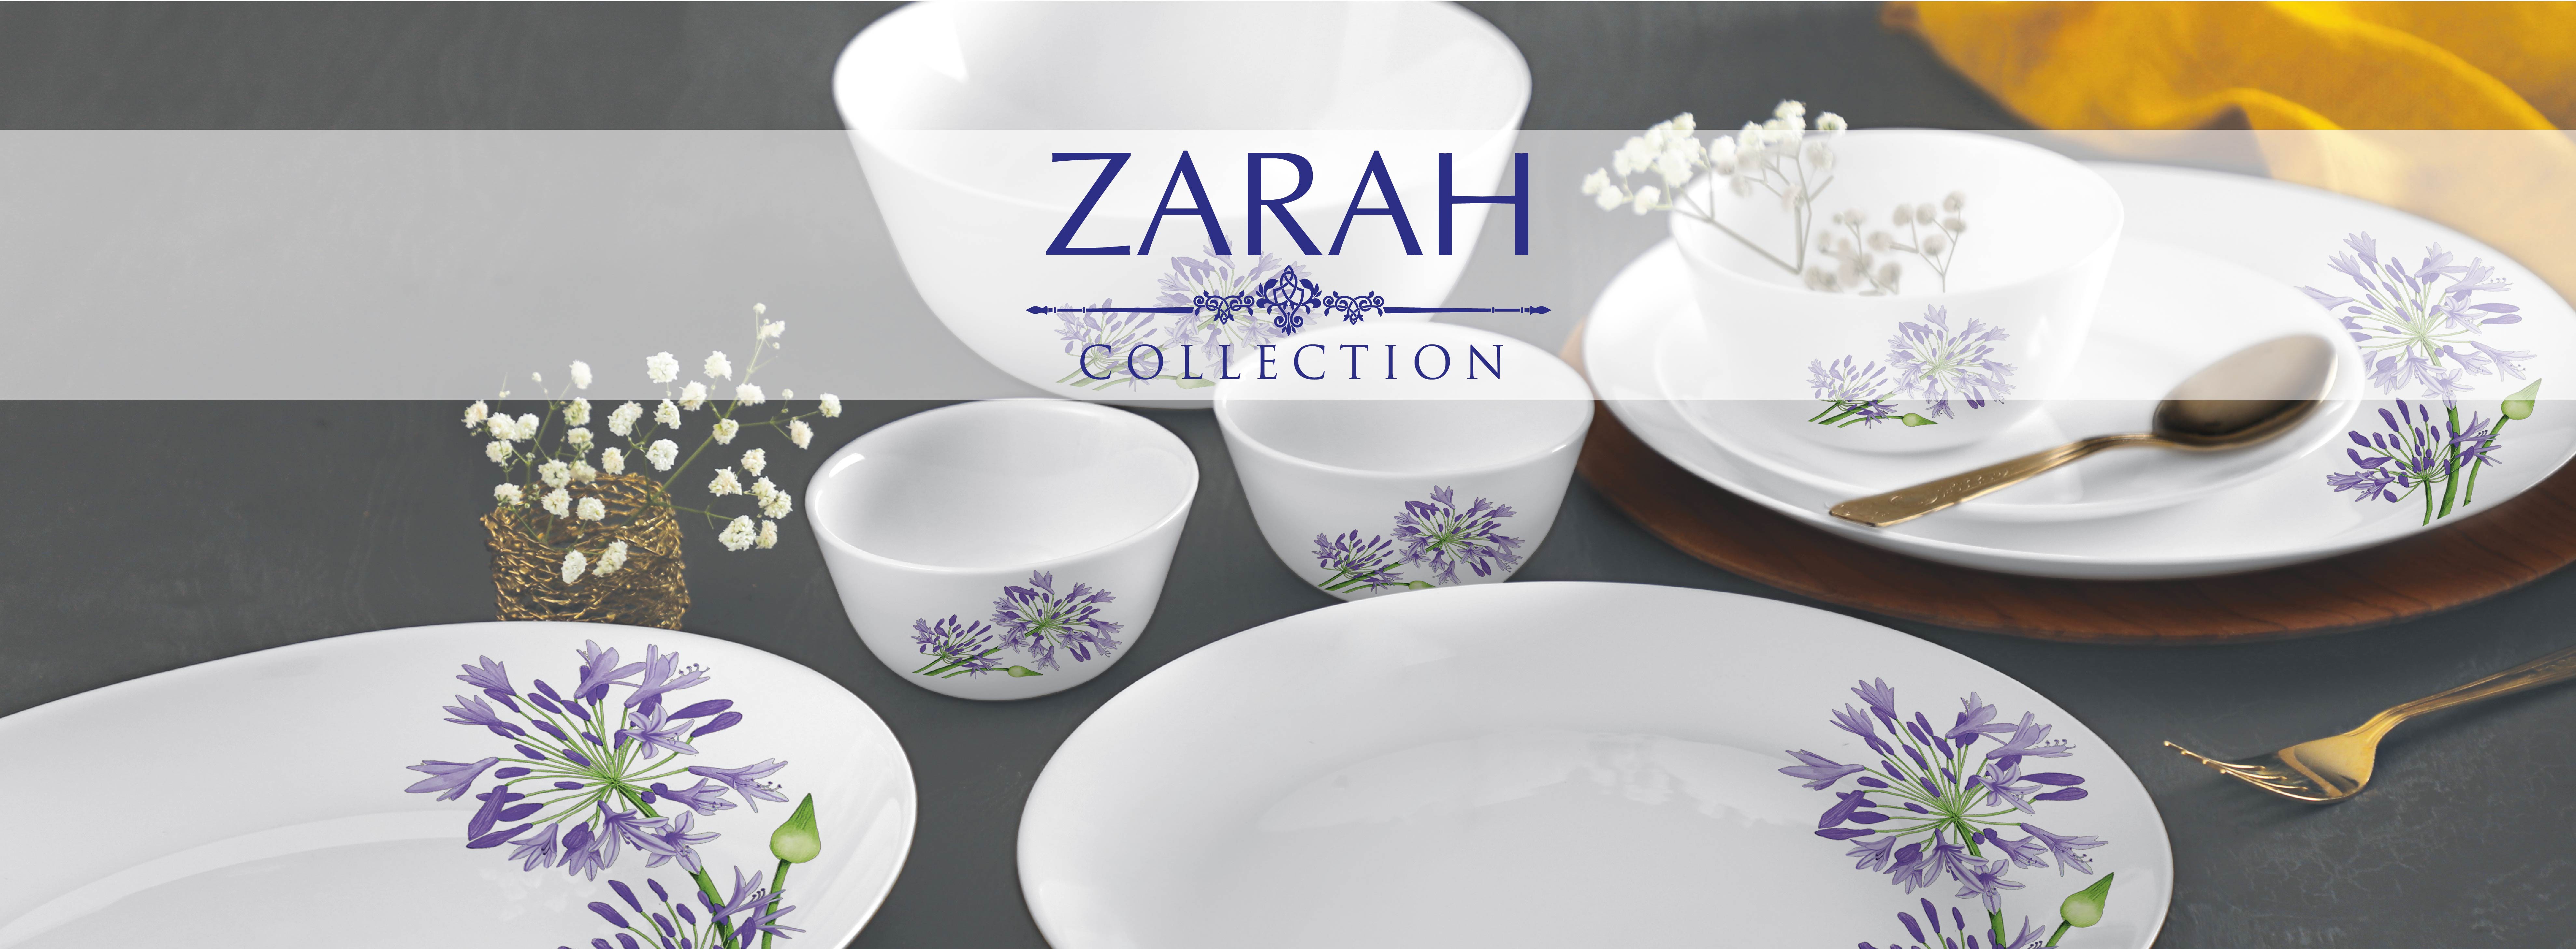 zarah collection